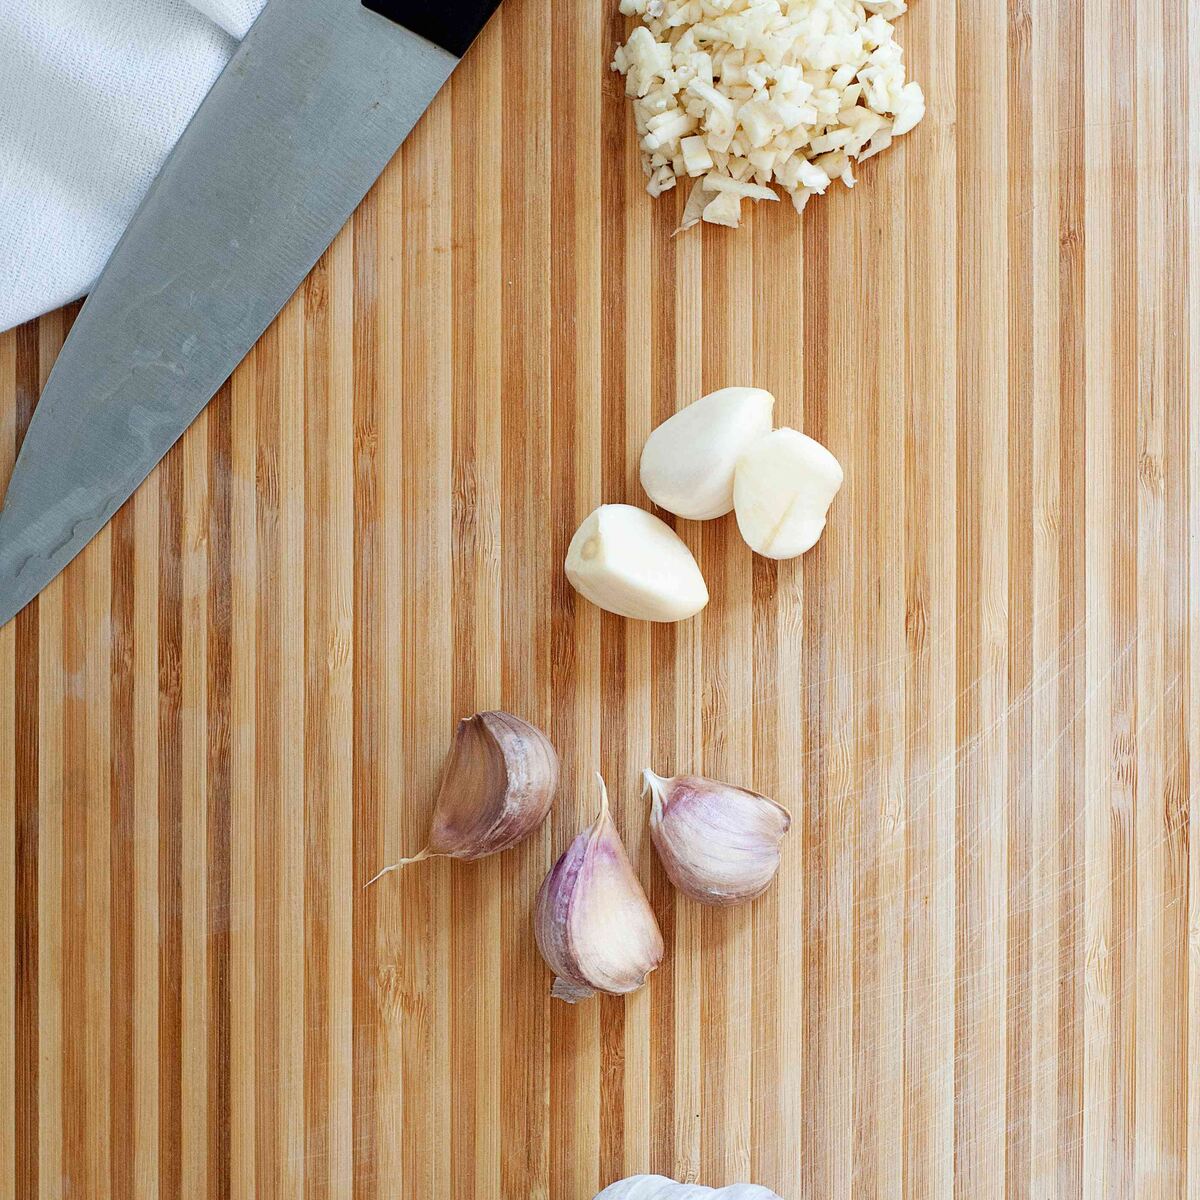 How To Store Garlic Heads